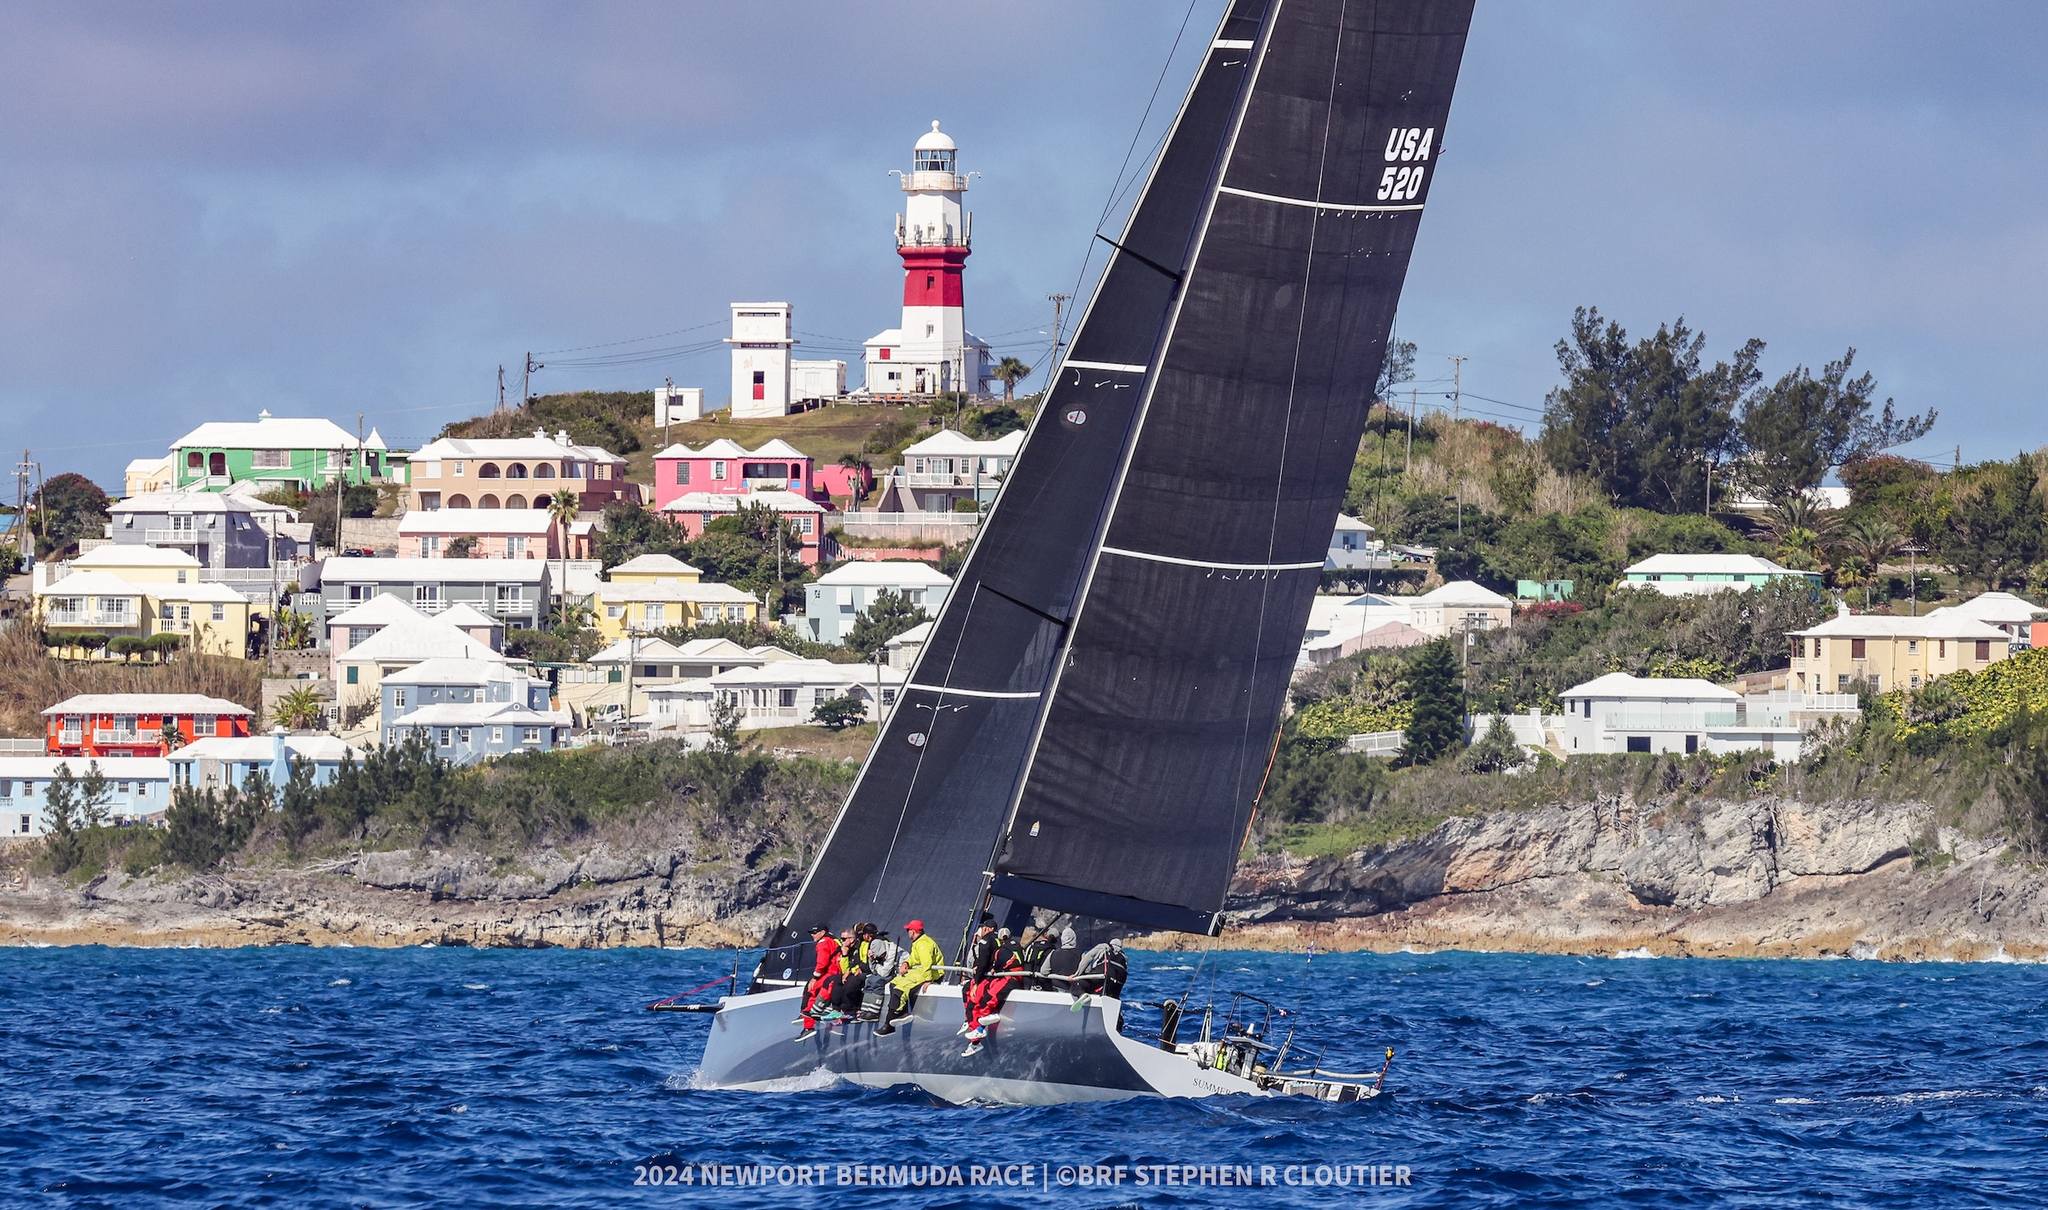 Summer Storm 52 Wins Newport Bermuda Race (Sailing)